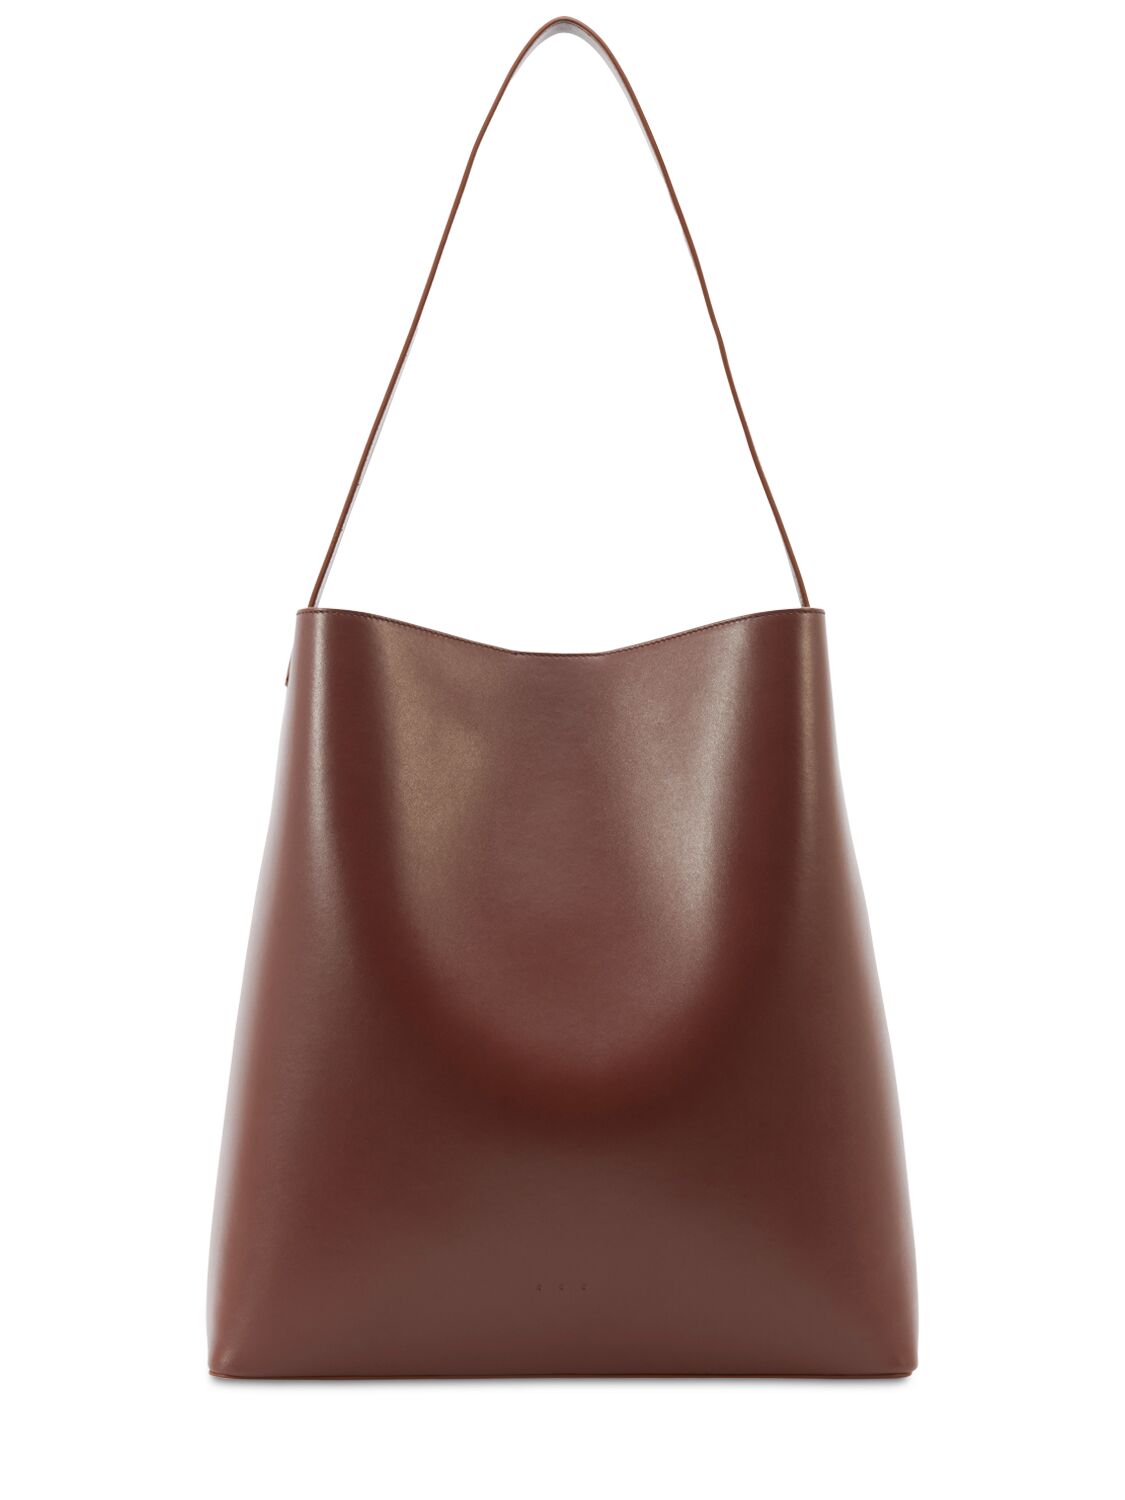 Image of Sac Smooth Leather Tote Bag